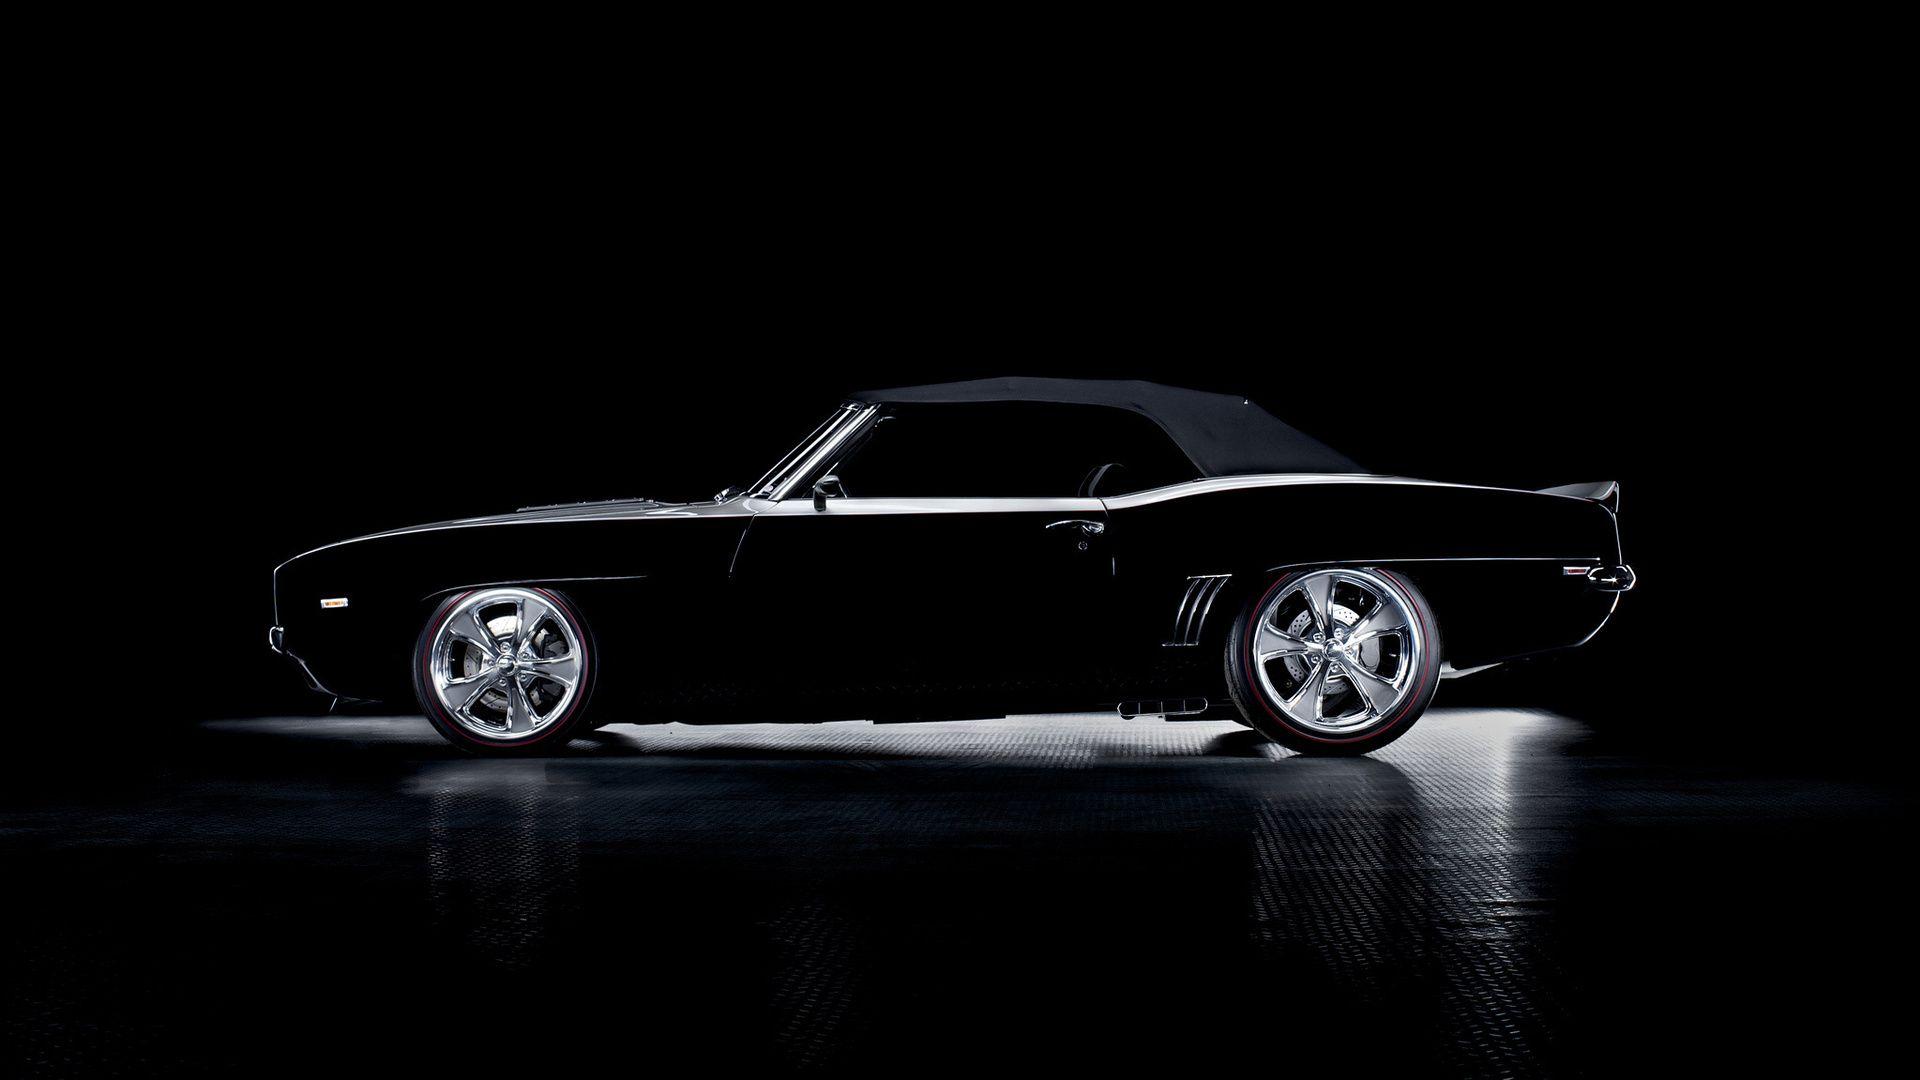 Old Cars On Black Background